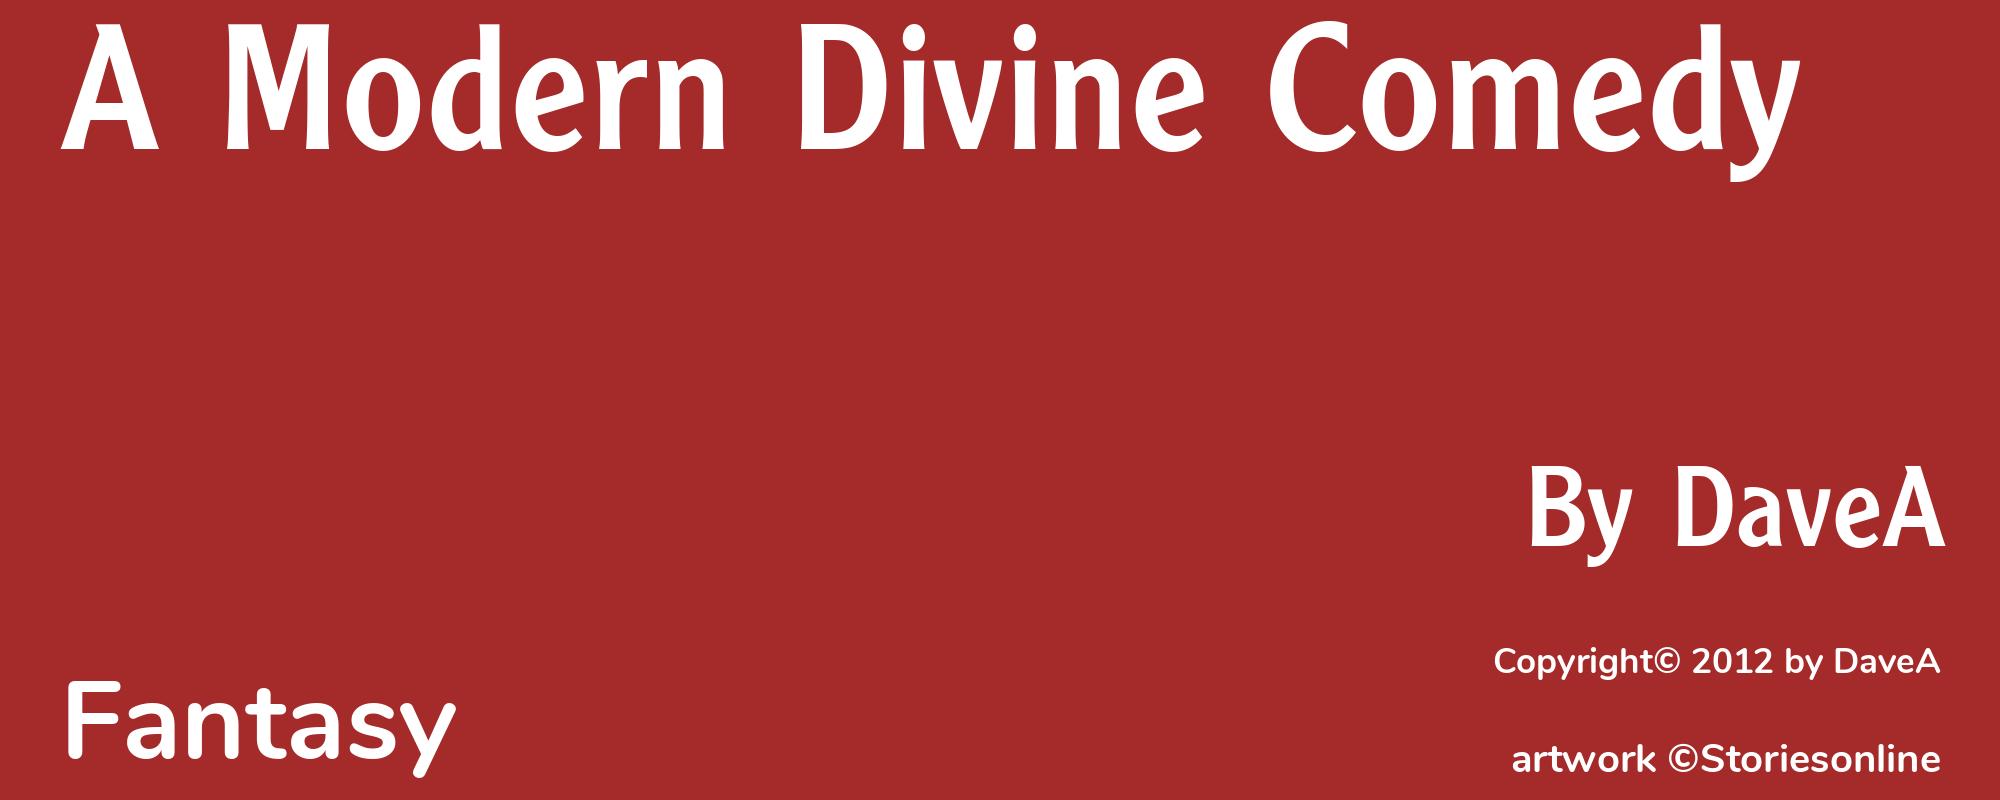 A Modern Divine Comedy - Cover